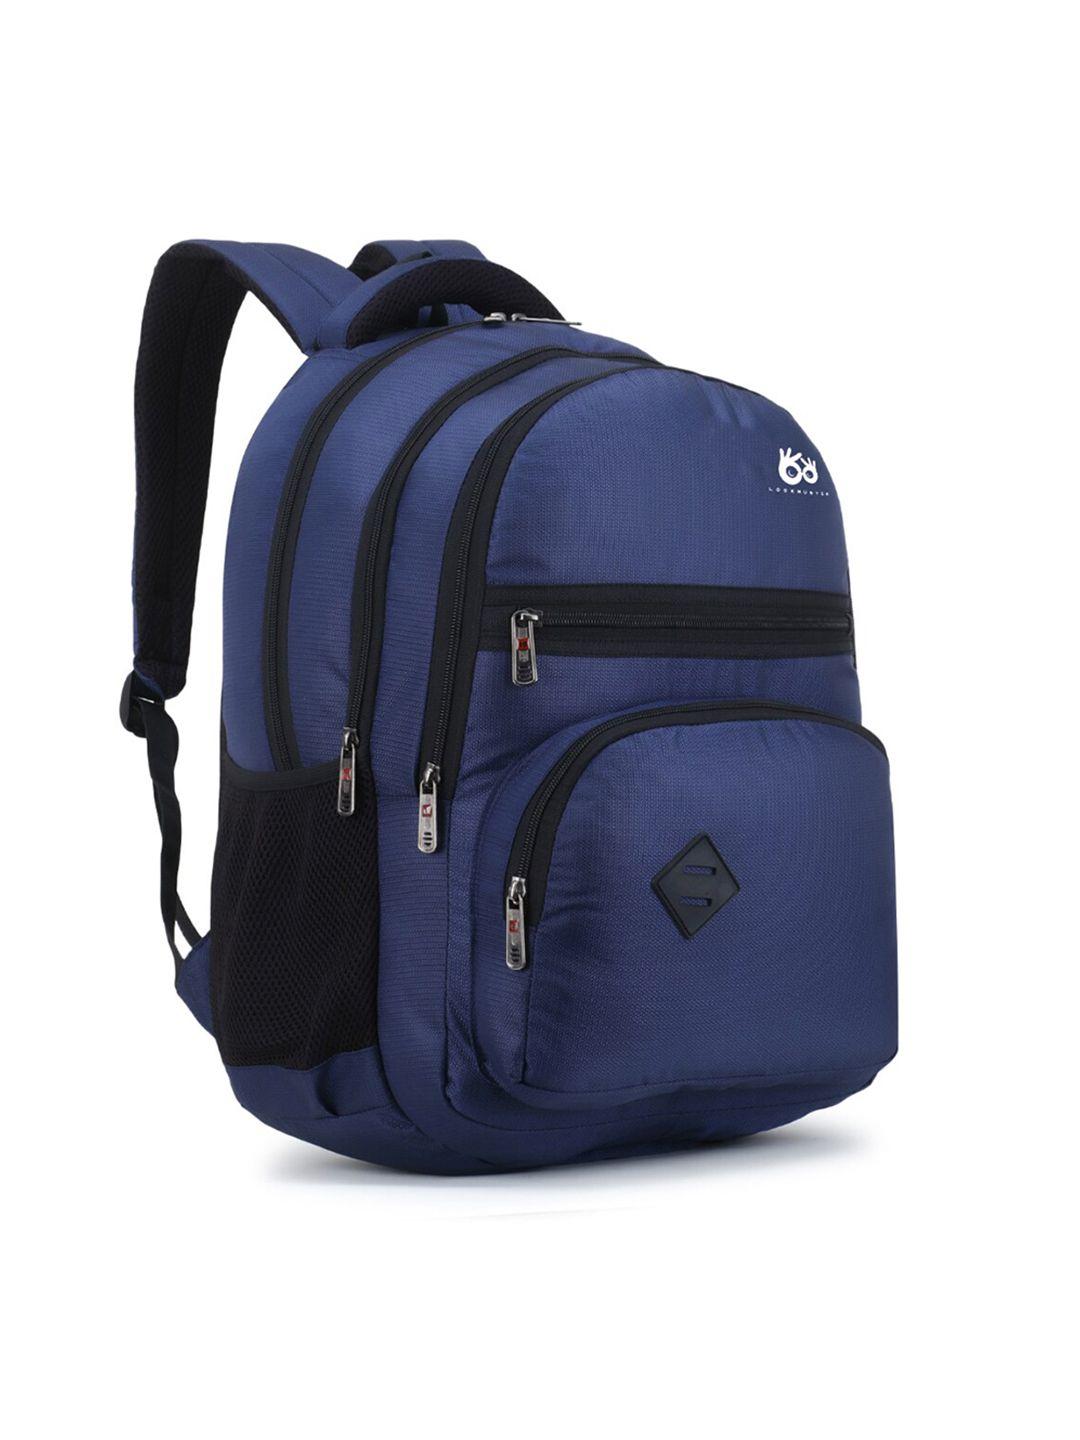 lookmuster unisex blue & black colourblocked backpack